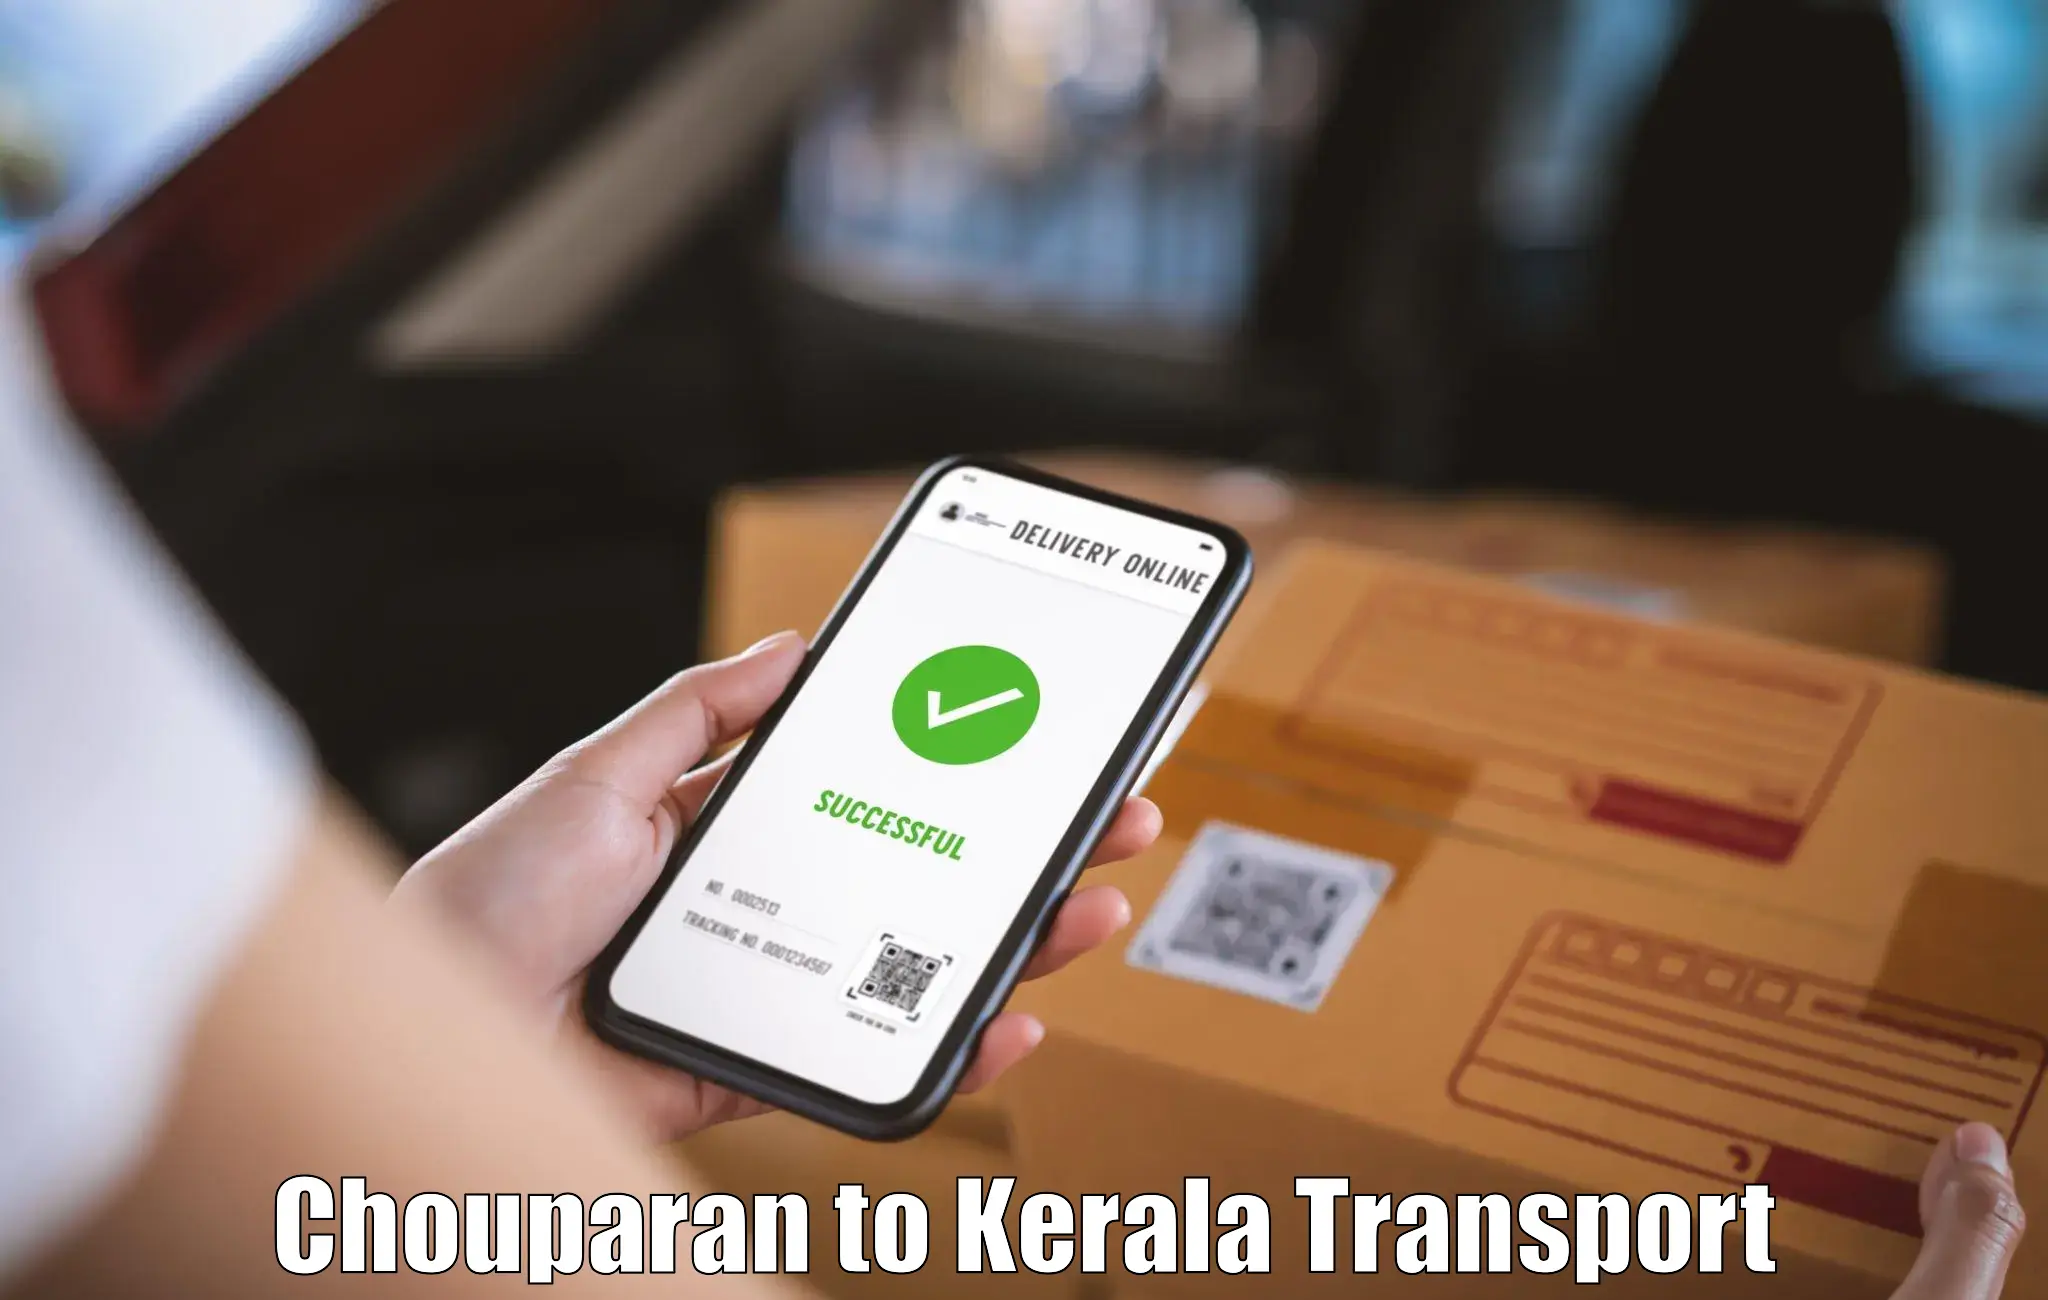 Transport shared services Chouparan to Kazhakkoottam